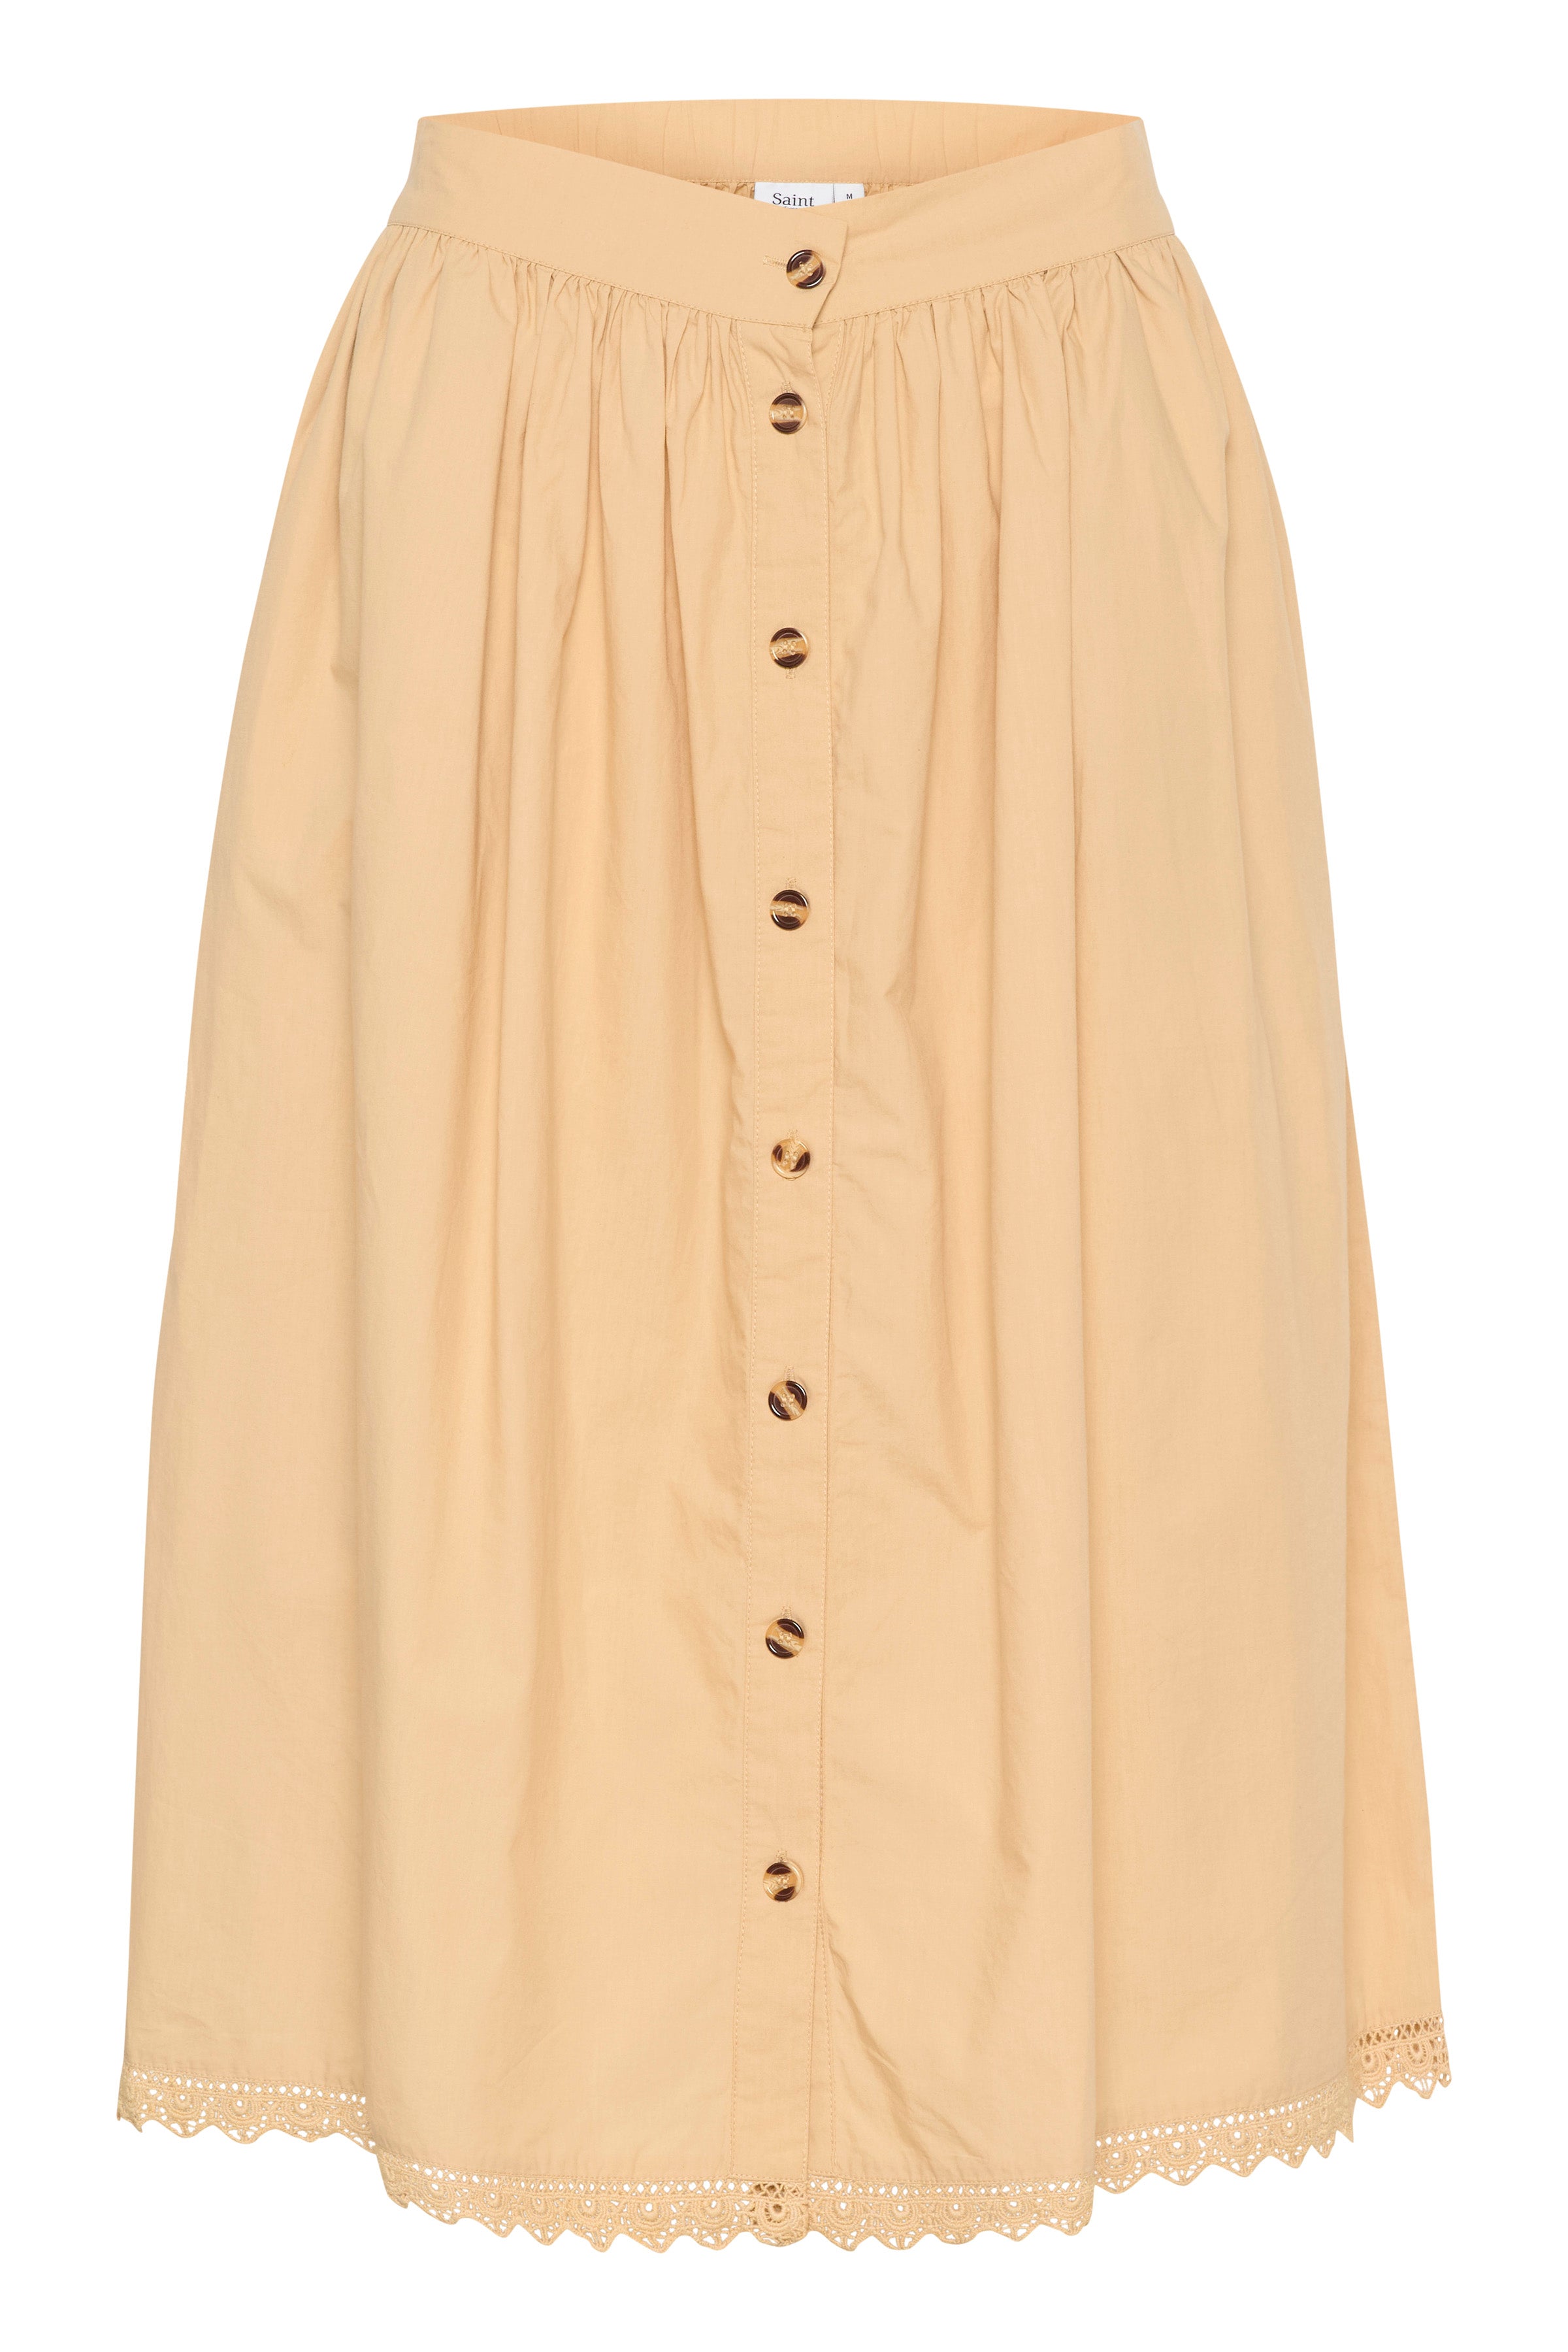 Saint Tropez Elvy Cotton Skirt in Whey